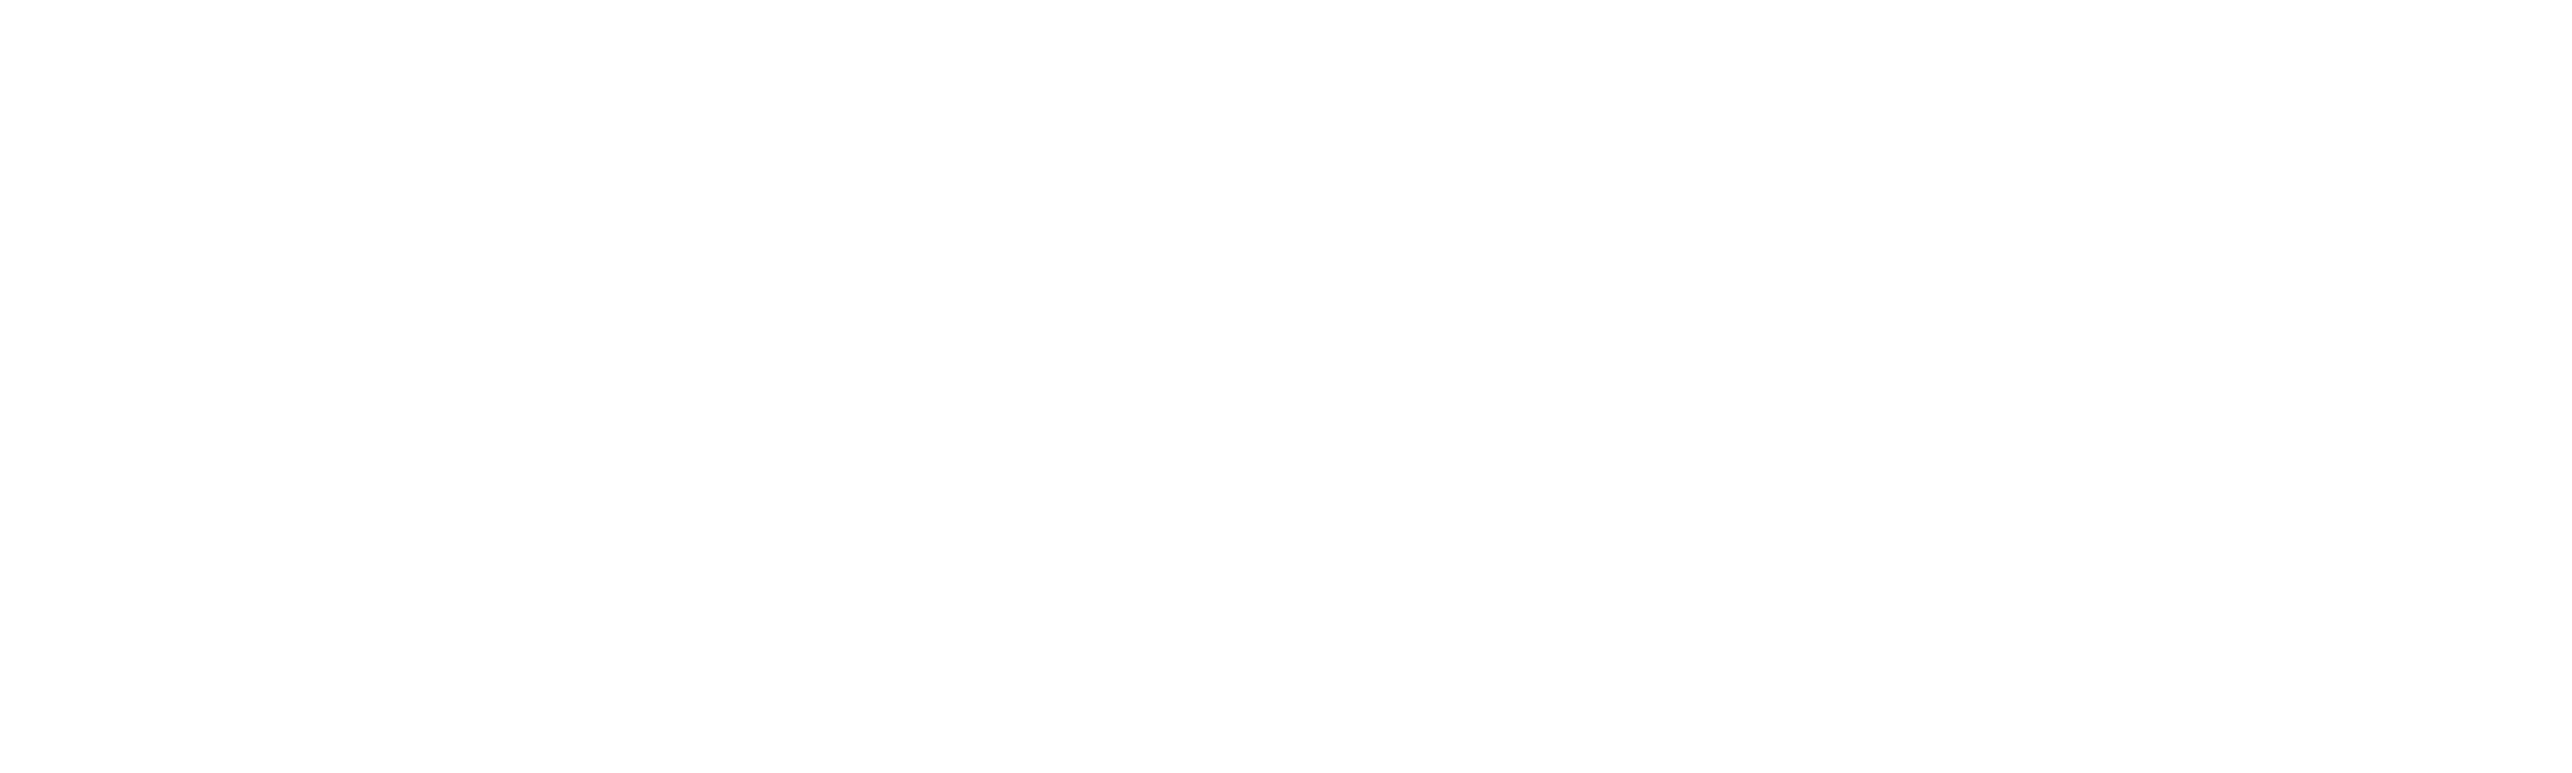 Keocko logo